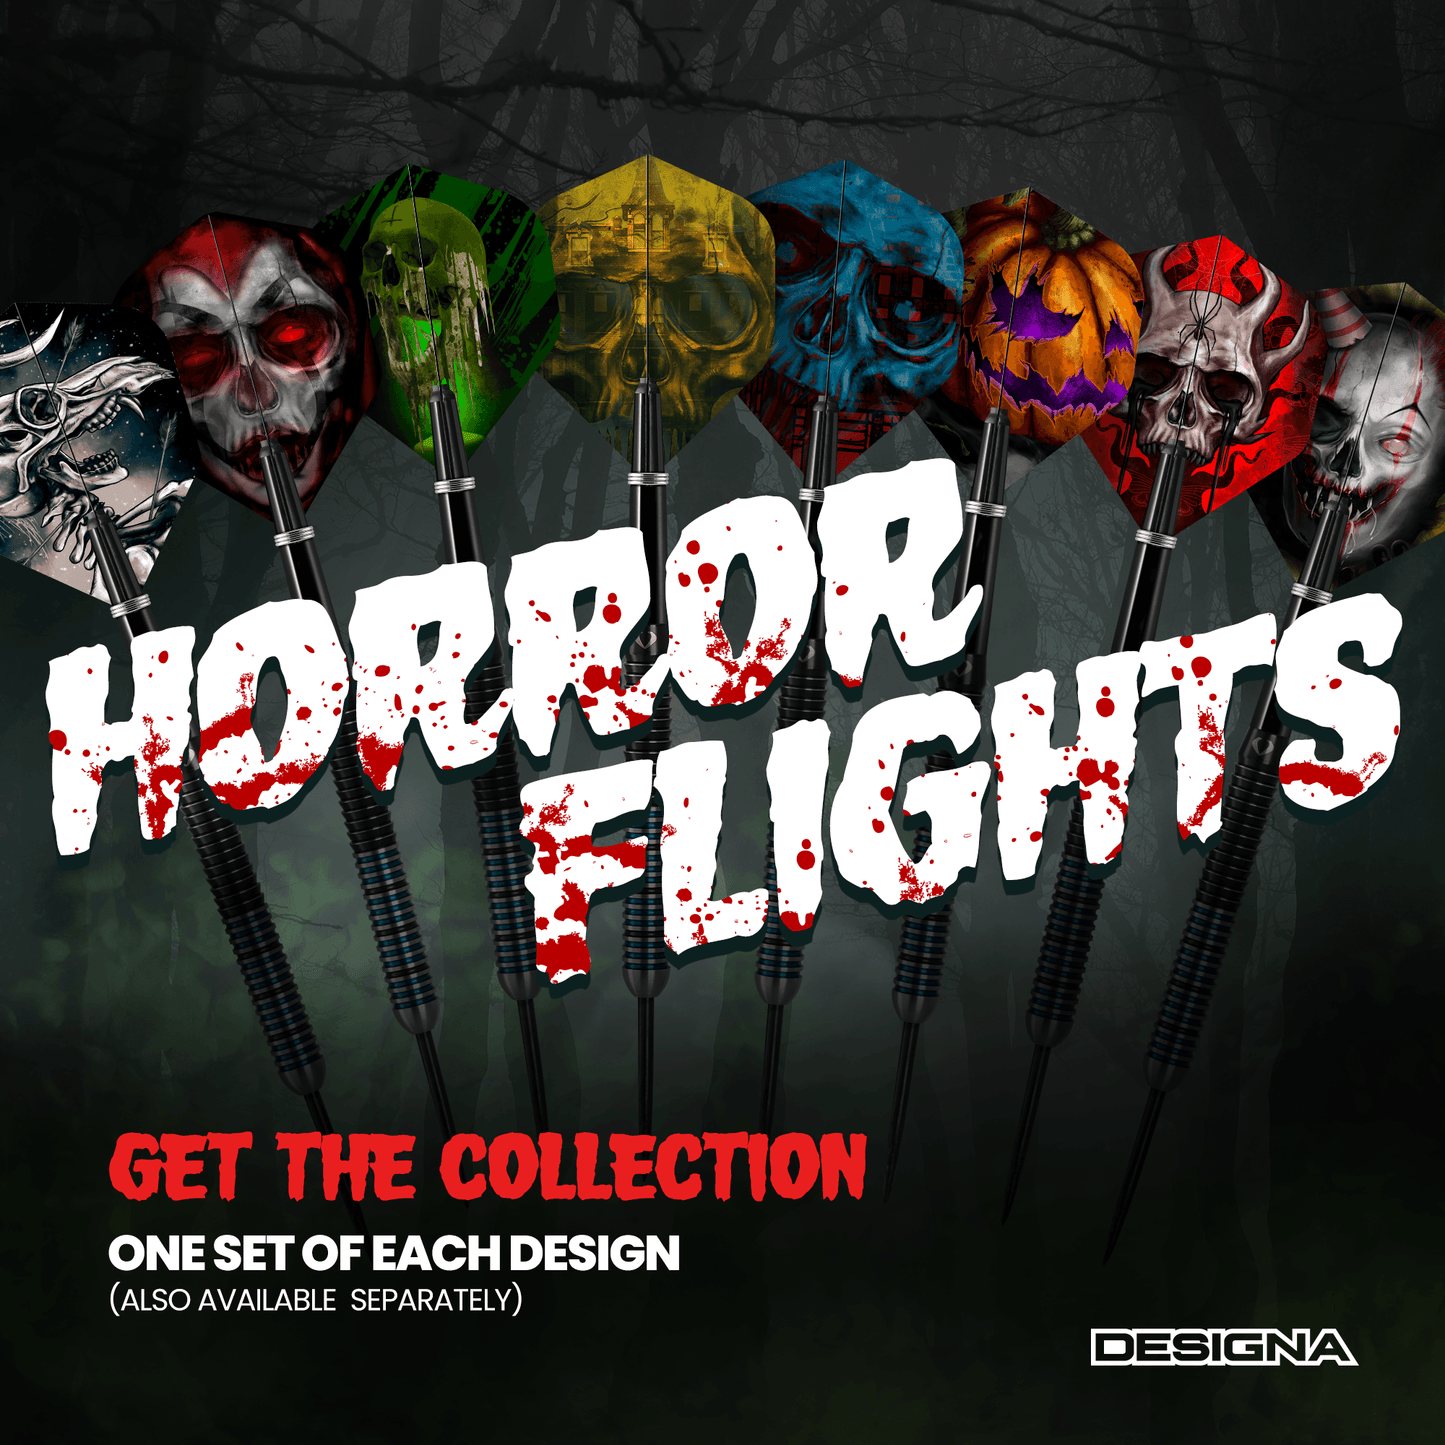 Designa Horror Show Collection Dart Flights - 8 Set Full Pack